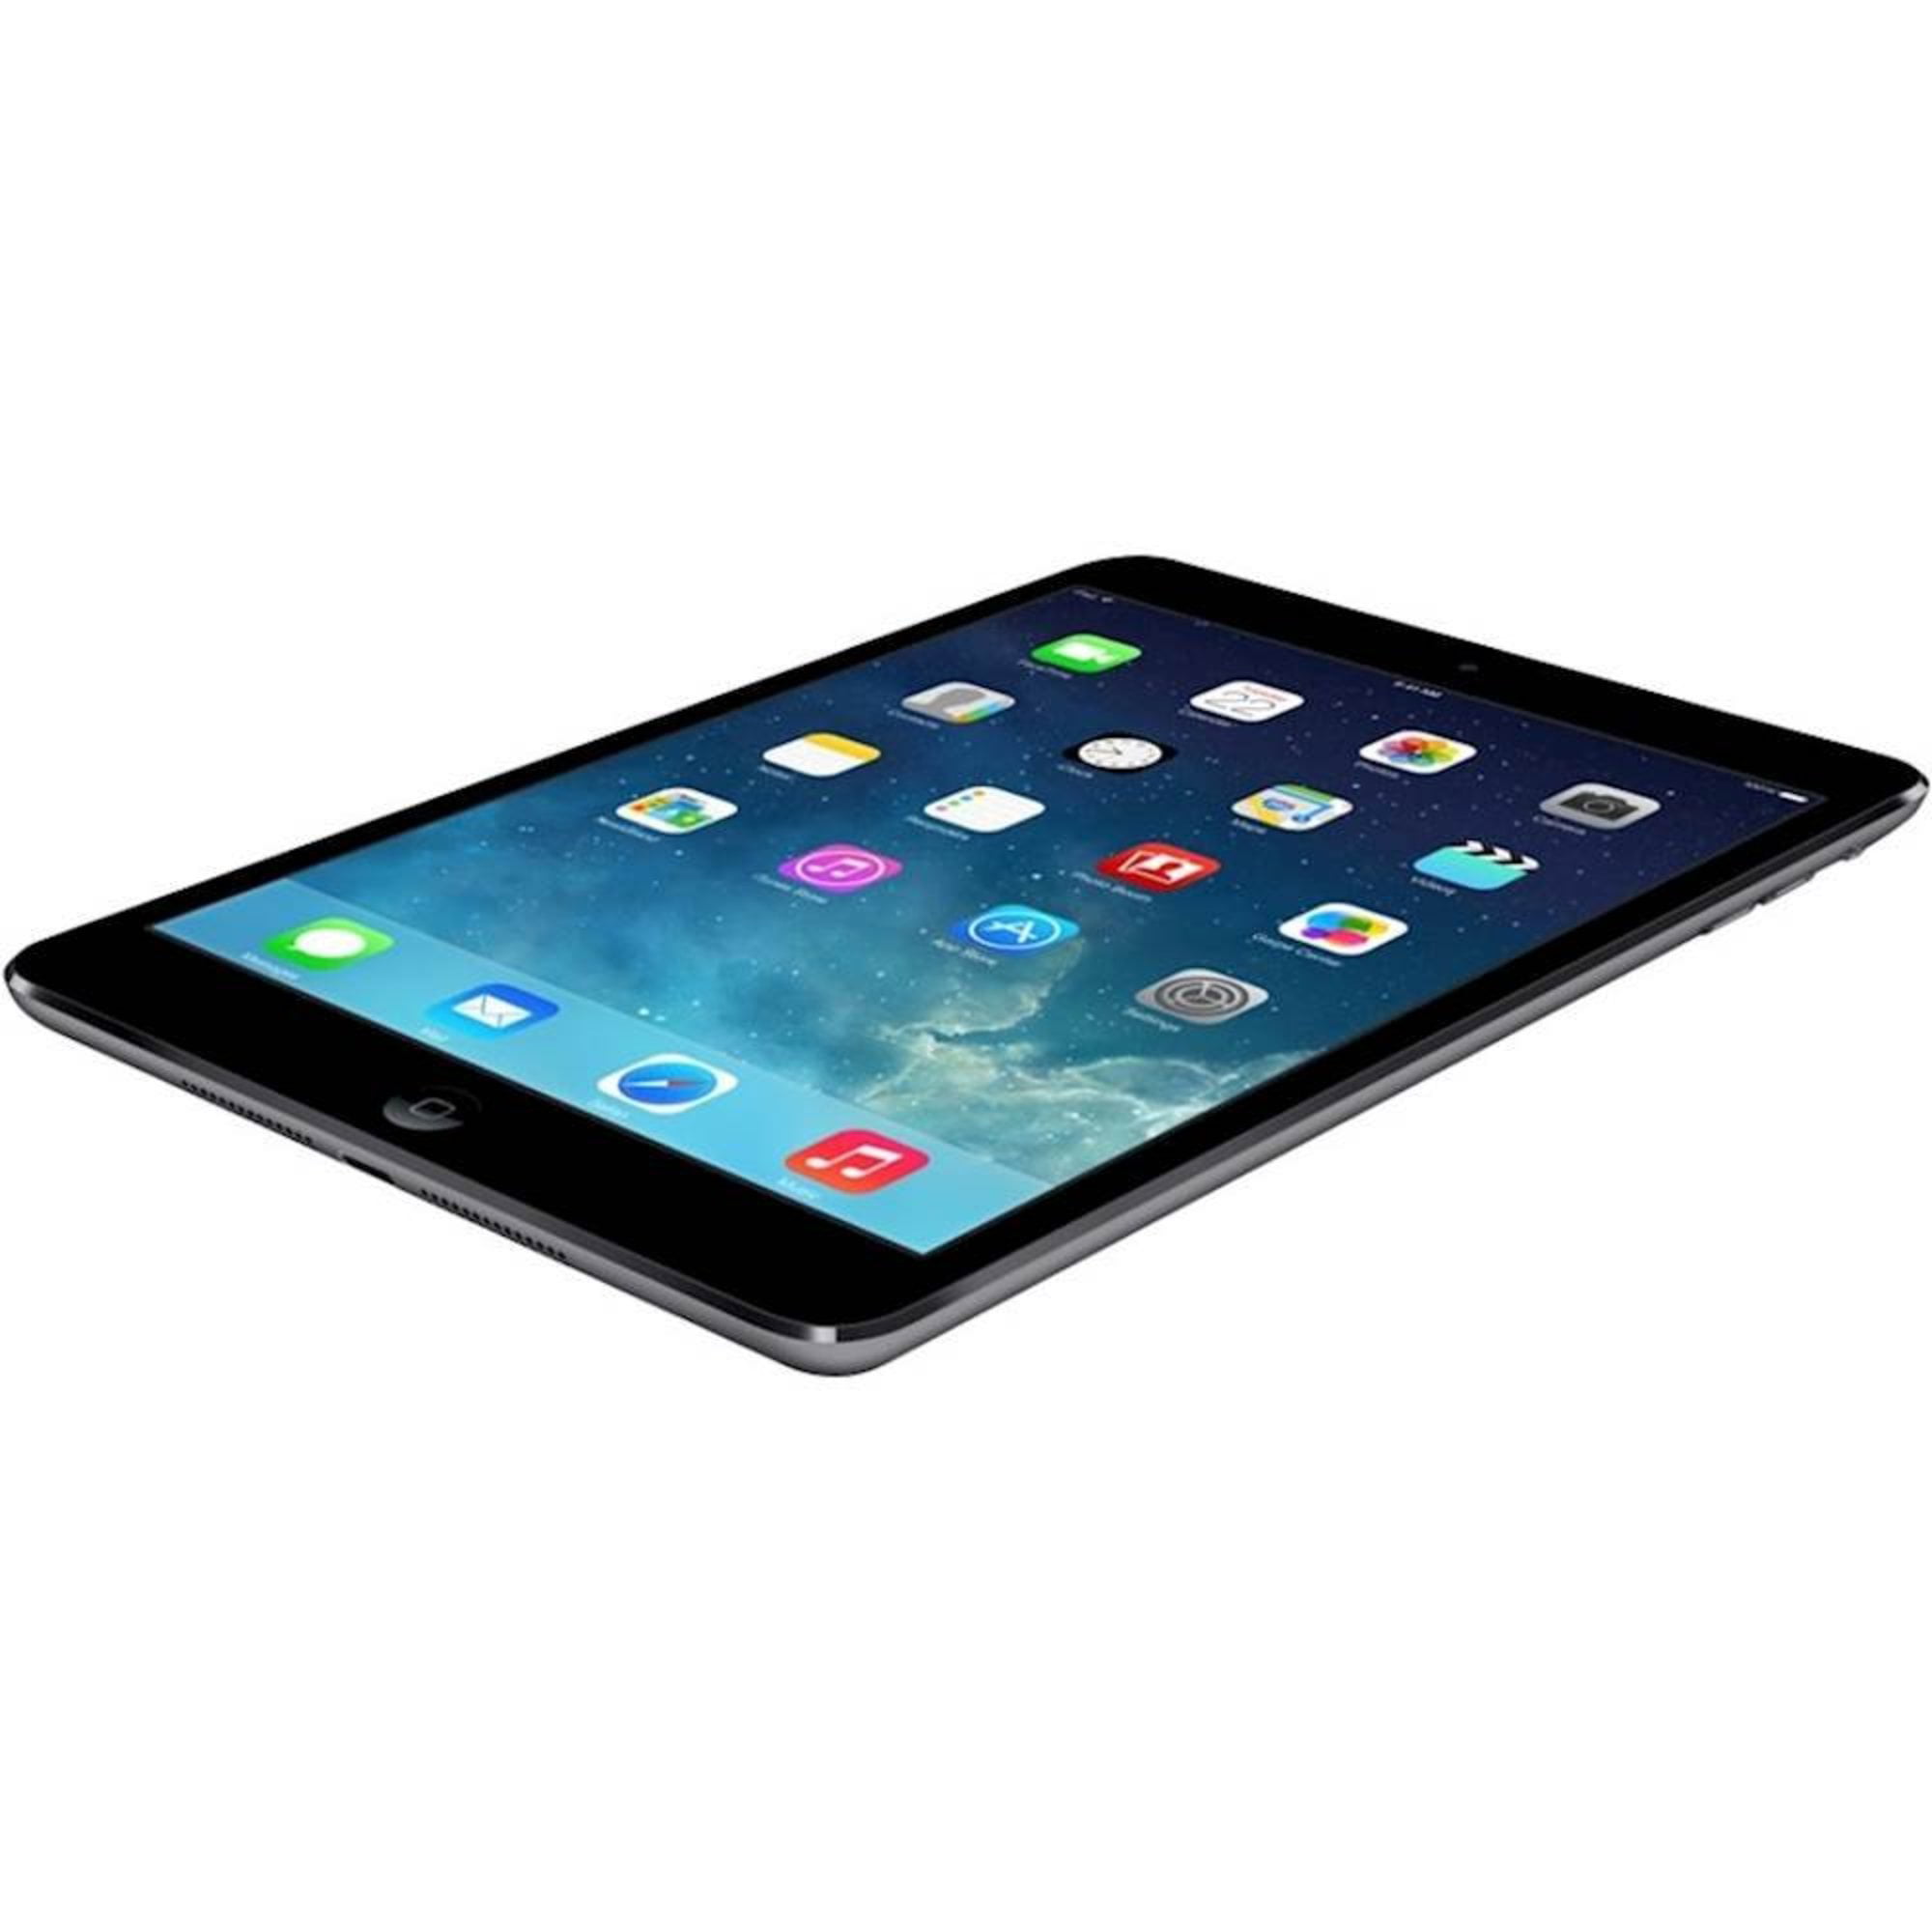 Apple iPad Mini 16GB Wi-Fi Enabled Tablet - Space Gray (Used 